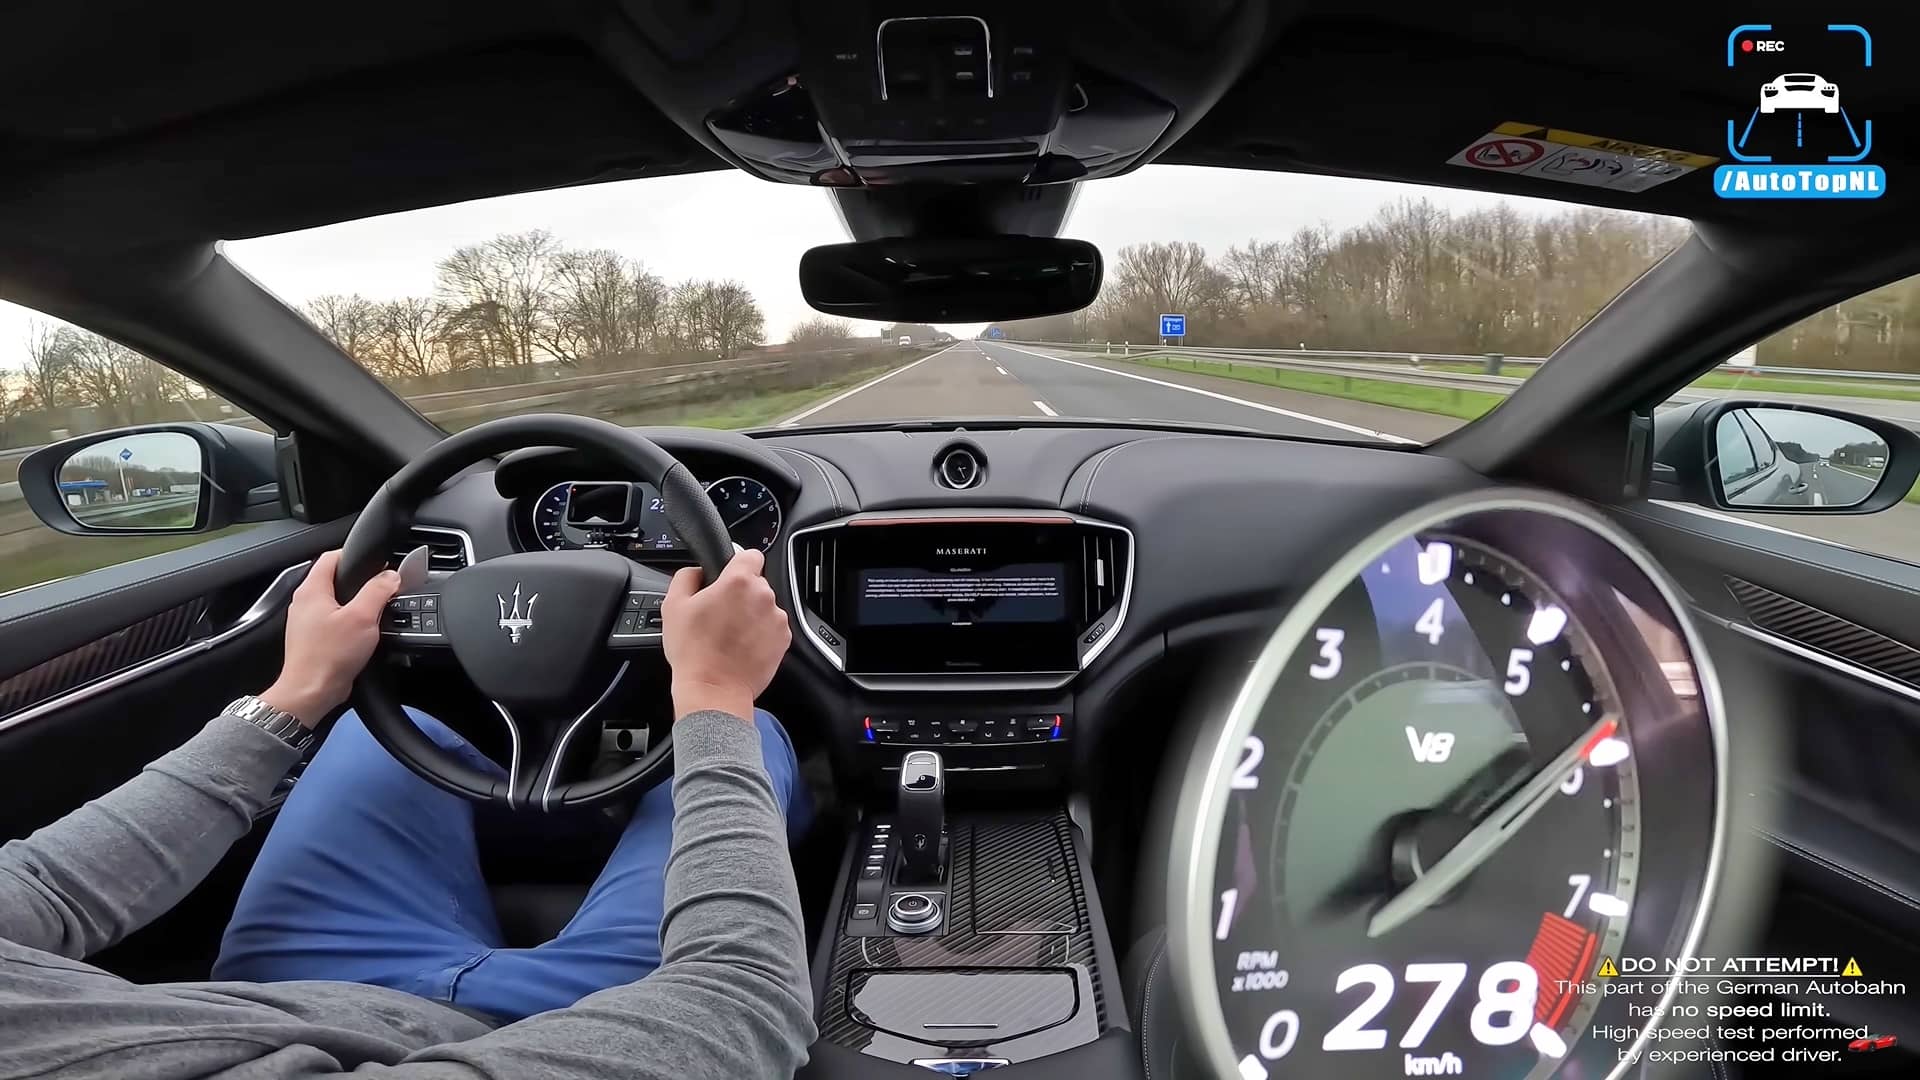 Pleasure is seeing the latest Ferrari-engined Maserati at full throttle on an Autobahn